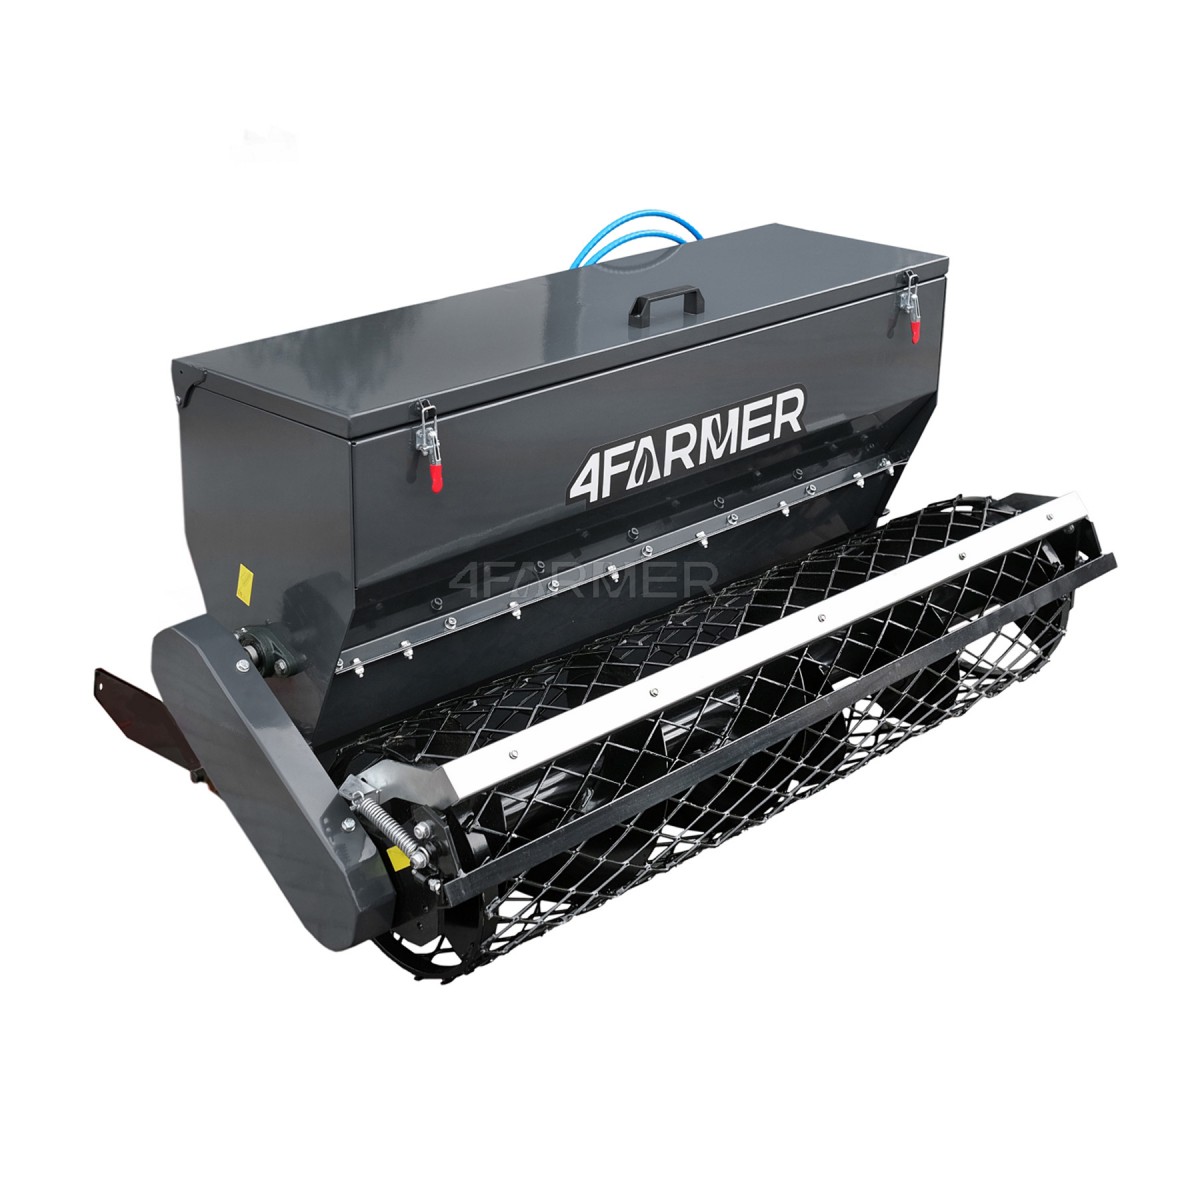 Seeder with a string roller for the SB 125 4FARMER tiller